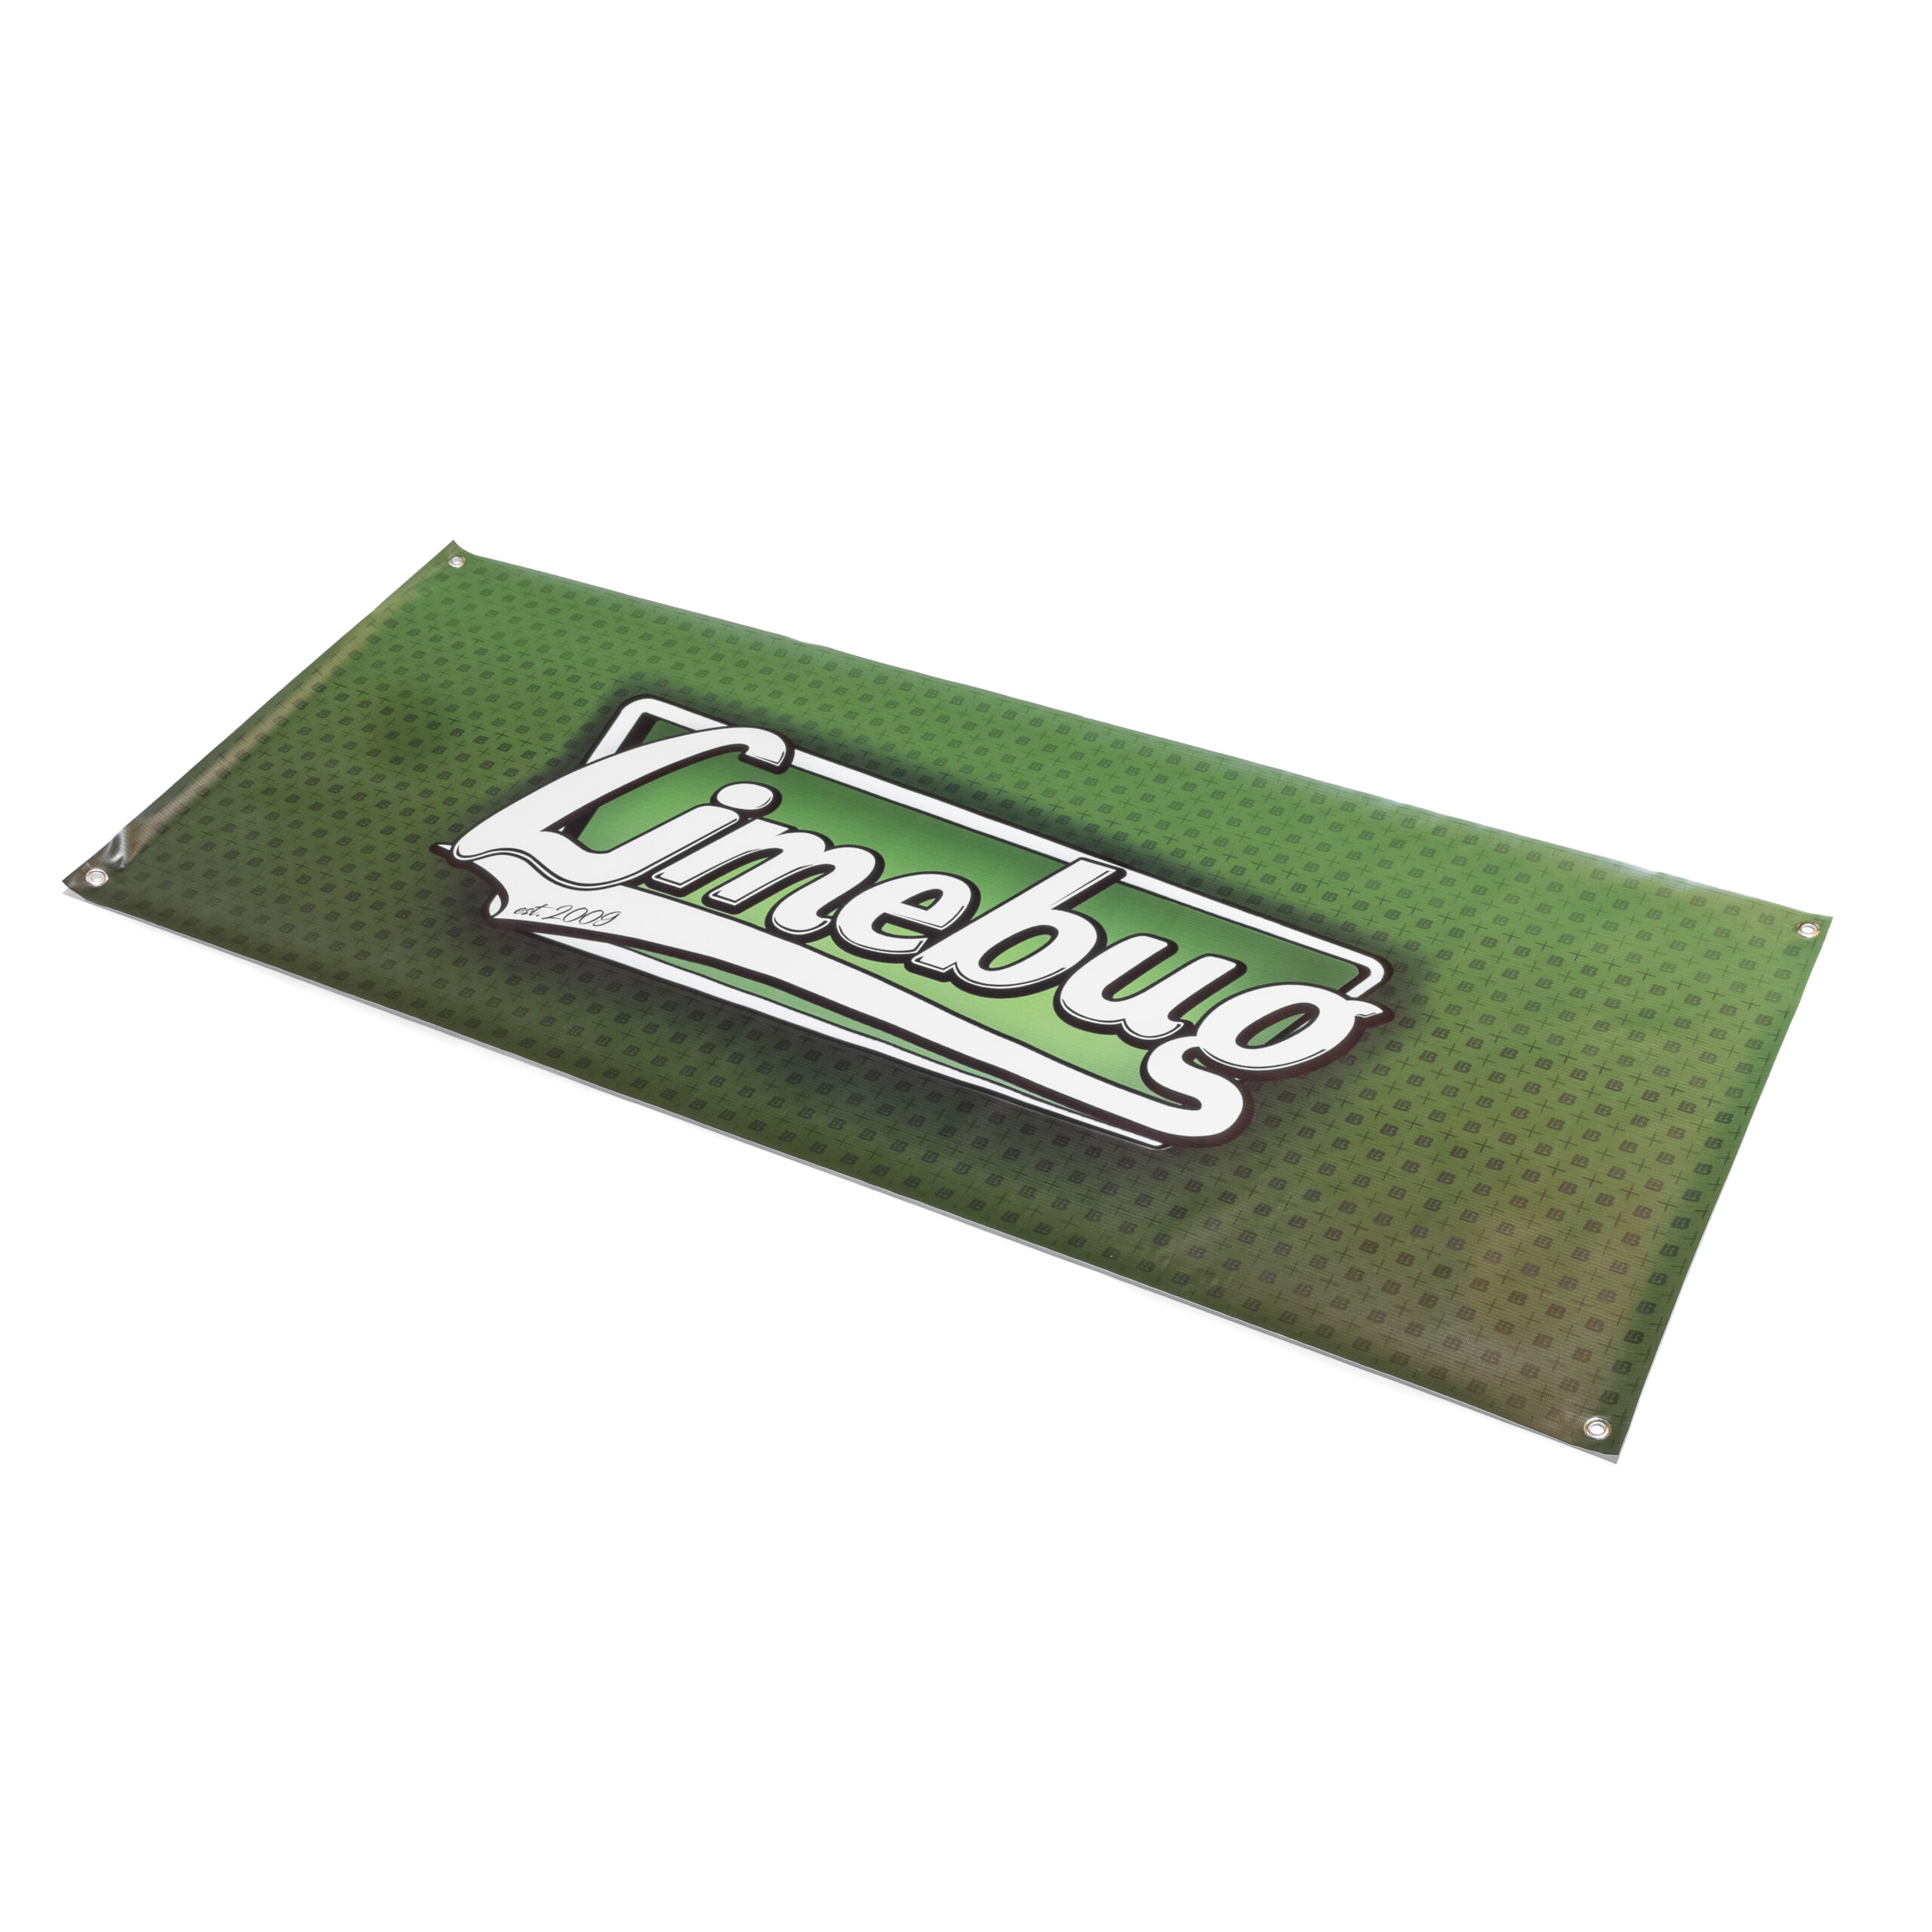 Limebug Workshop Garage Vinyl Banner (150cm x 60cm)